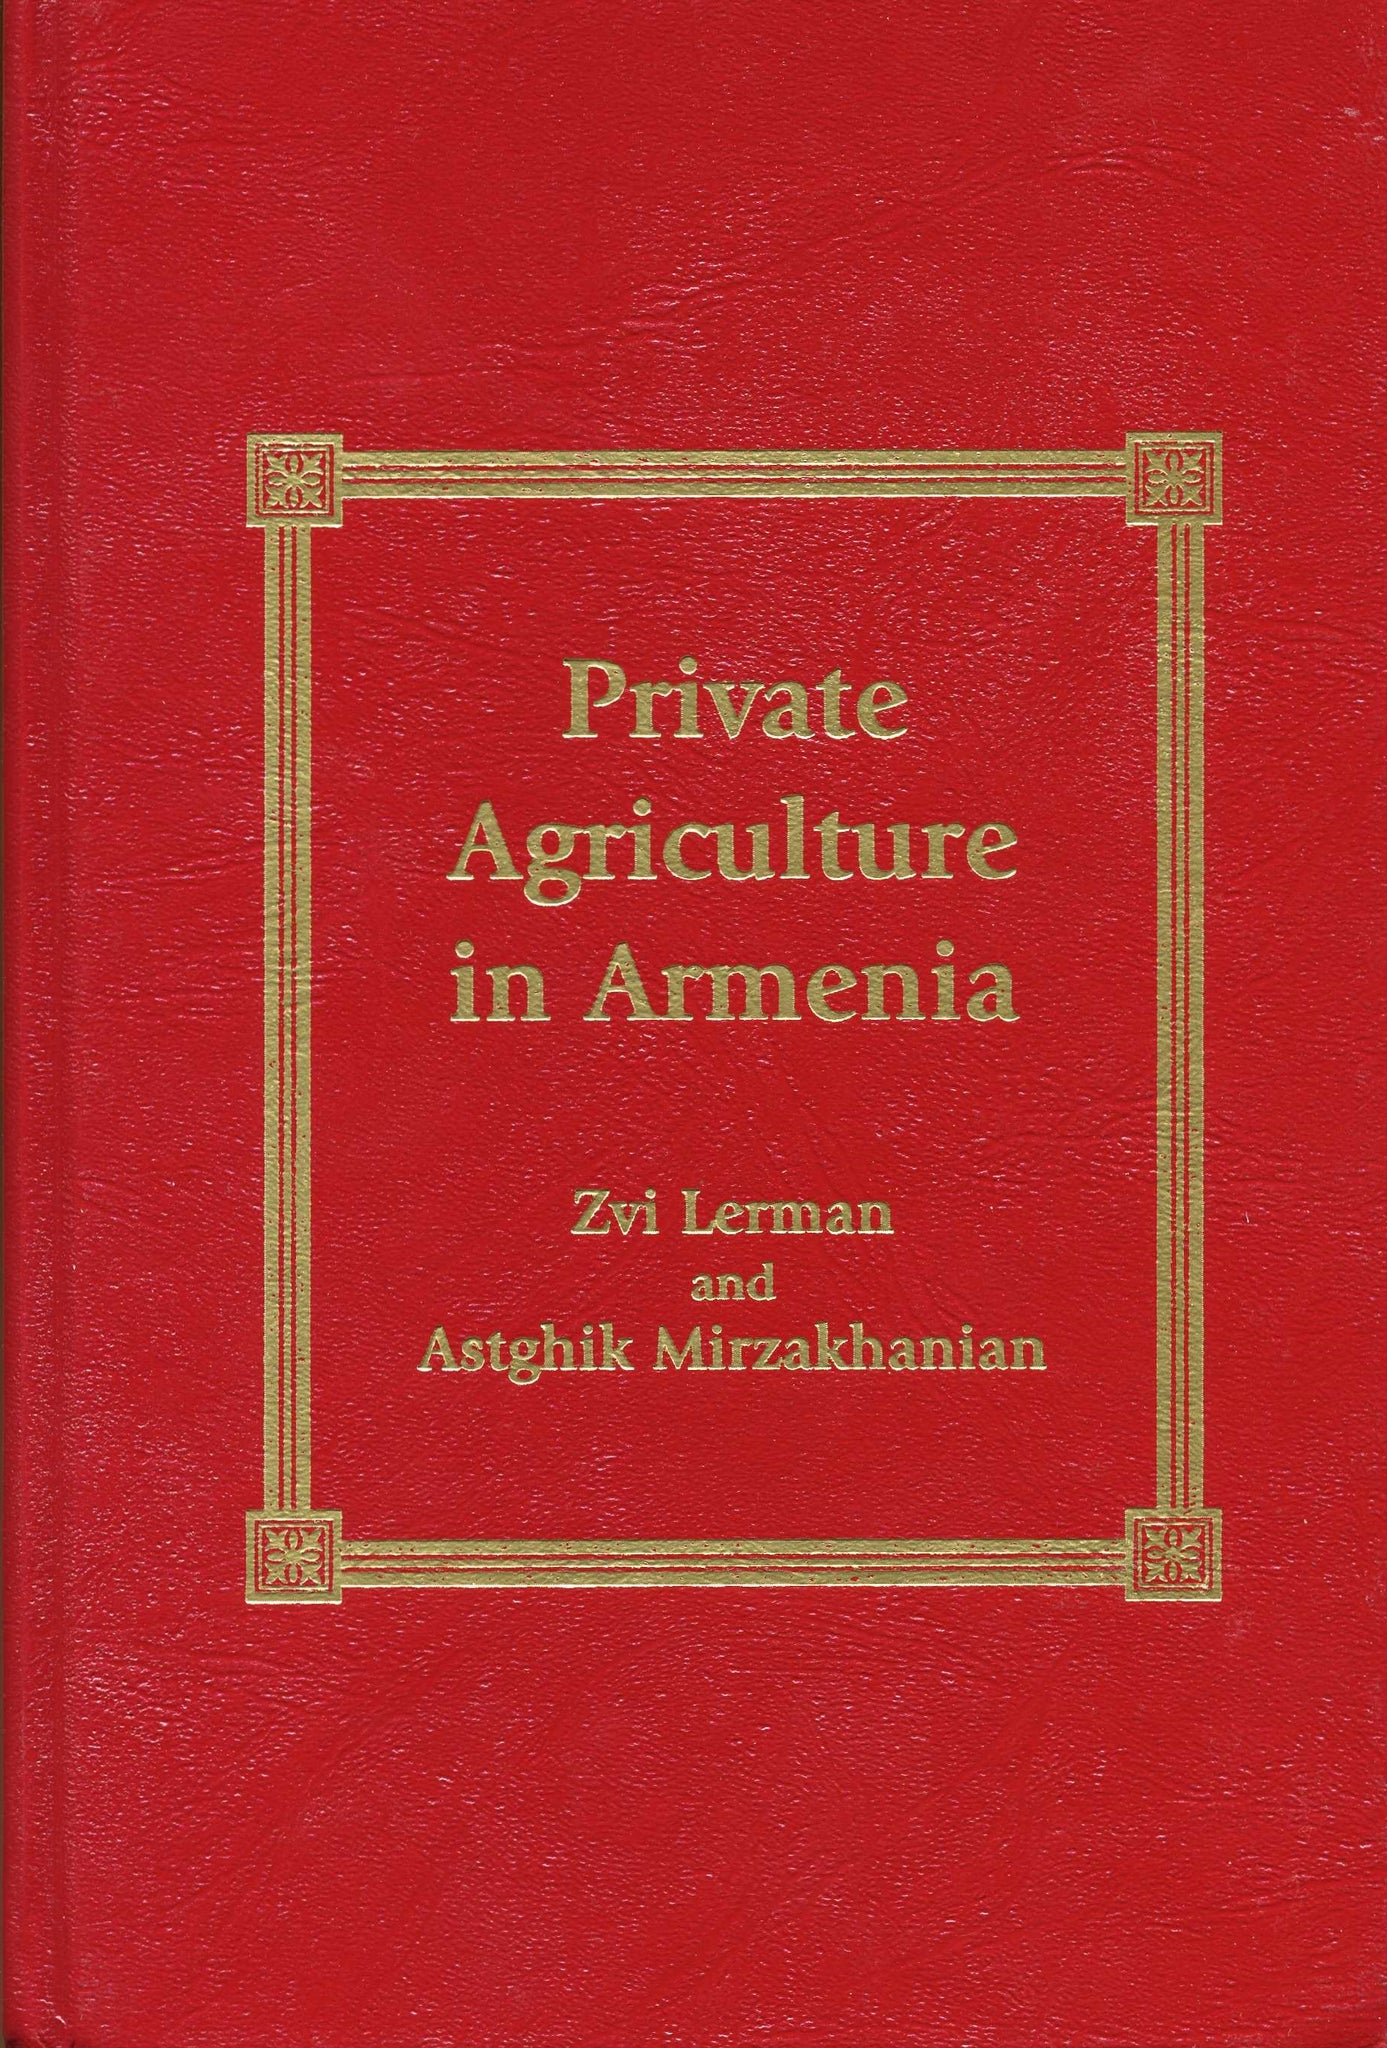 PRIVATE AGRICULTURE IN ARMENIA